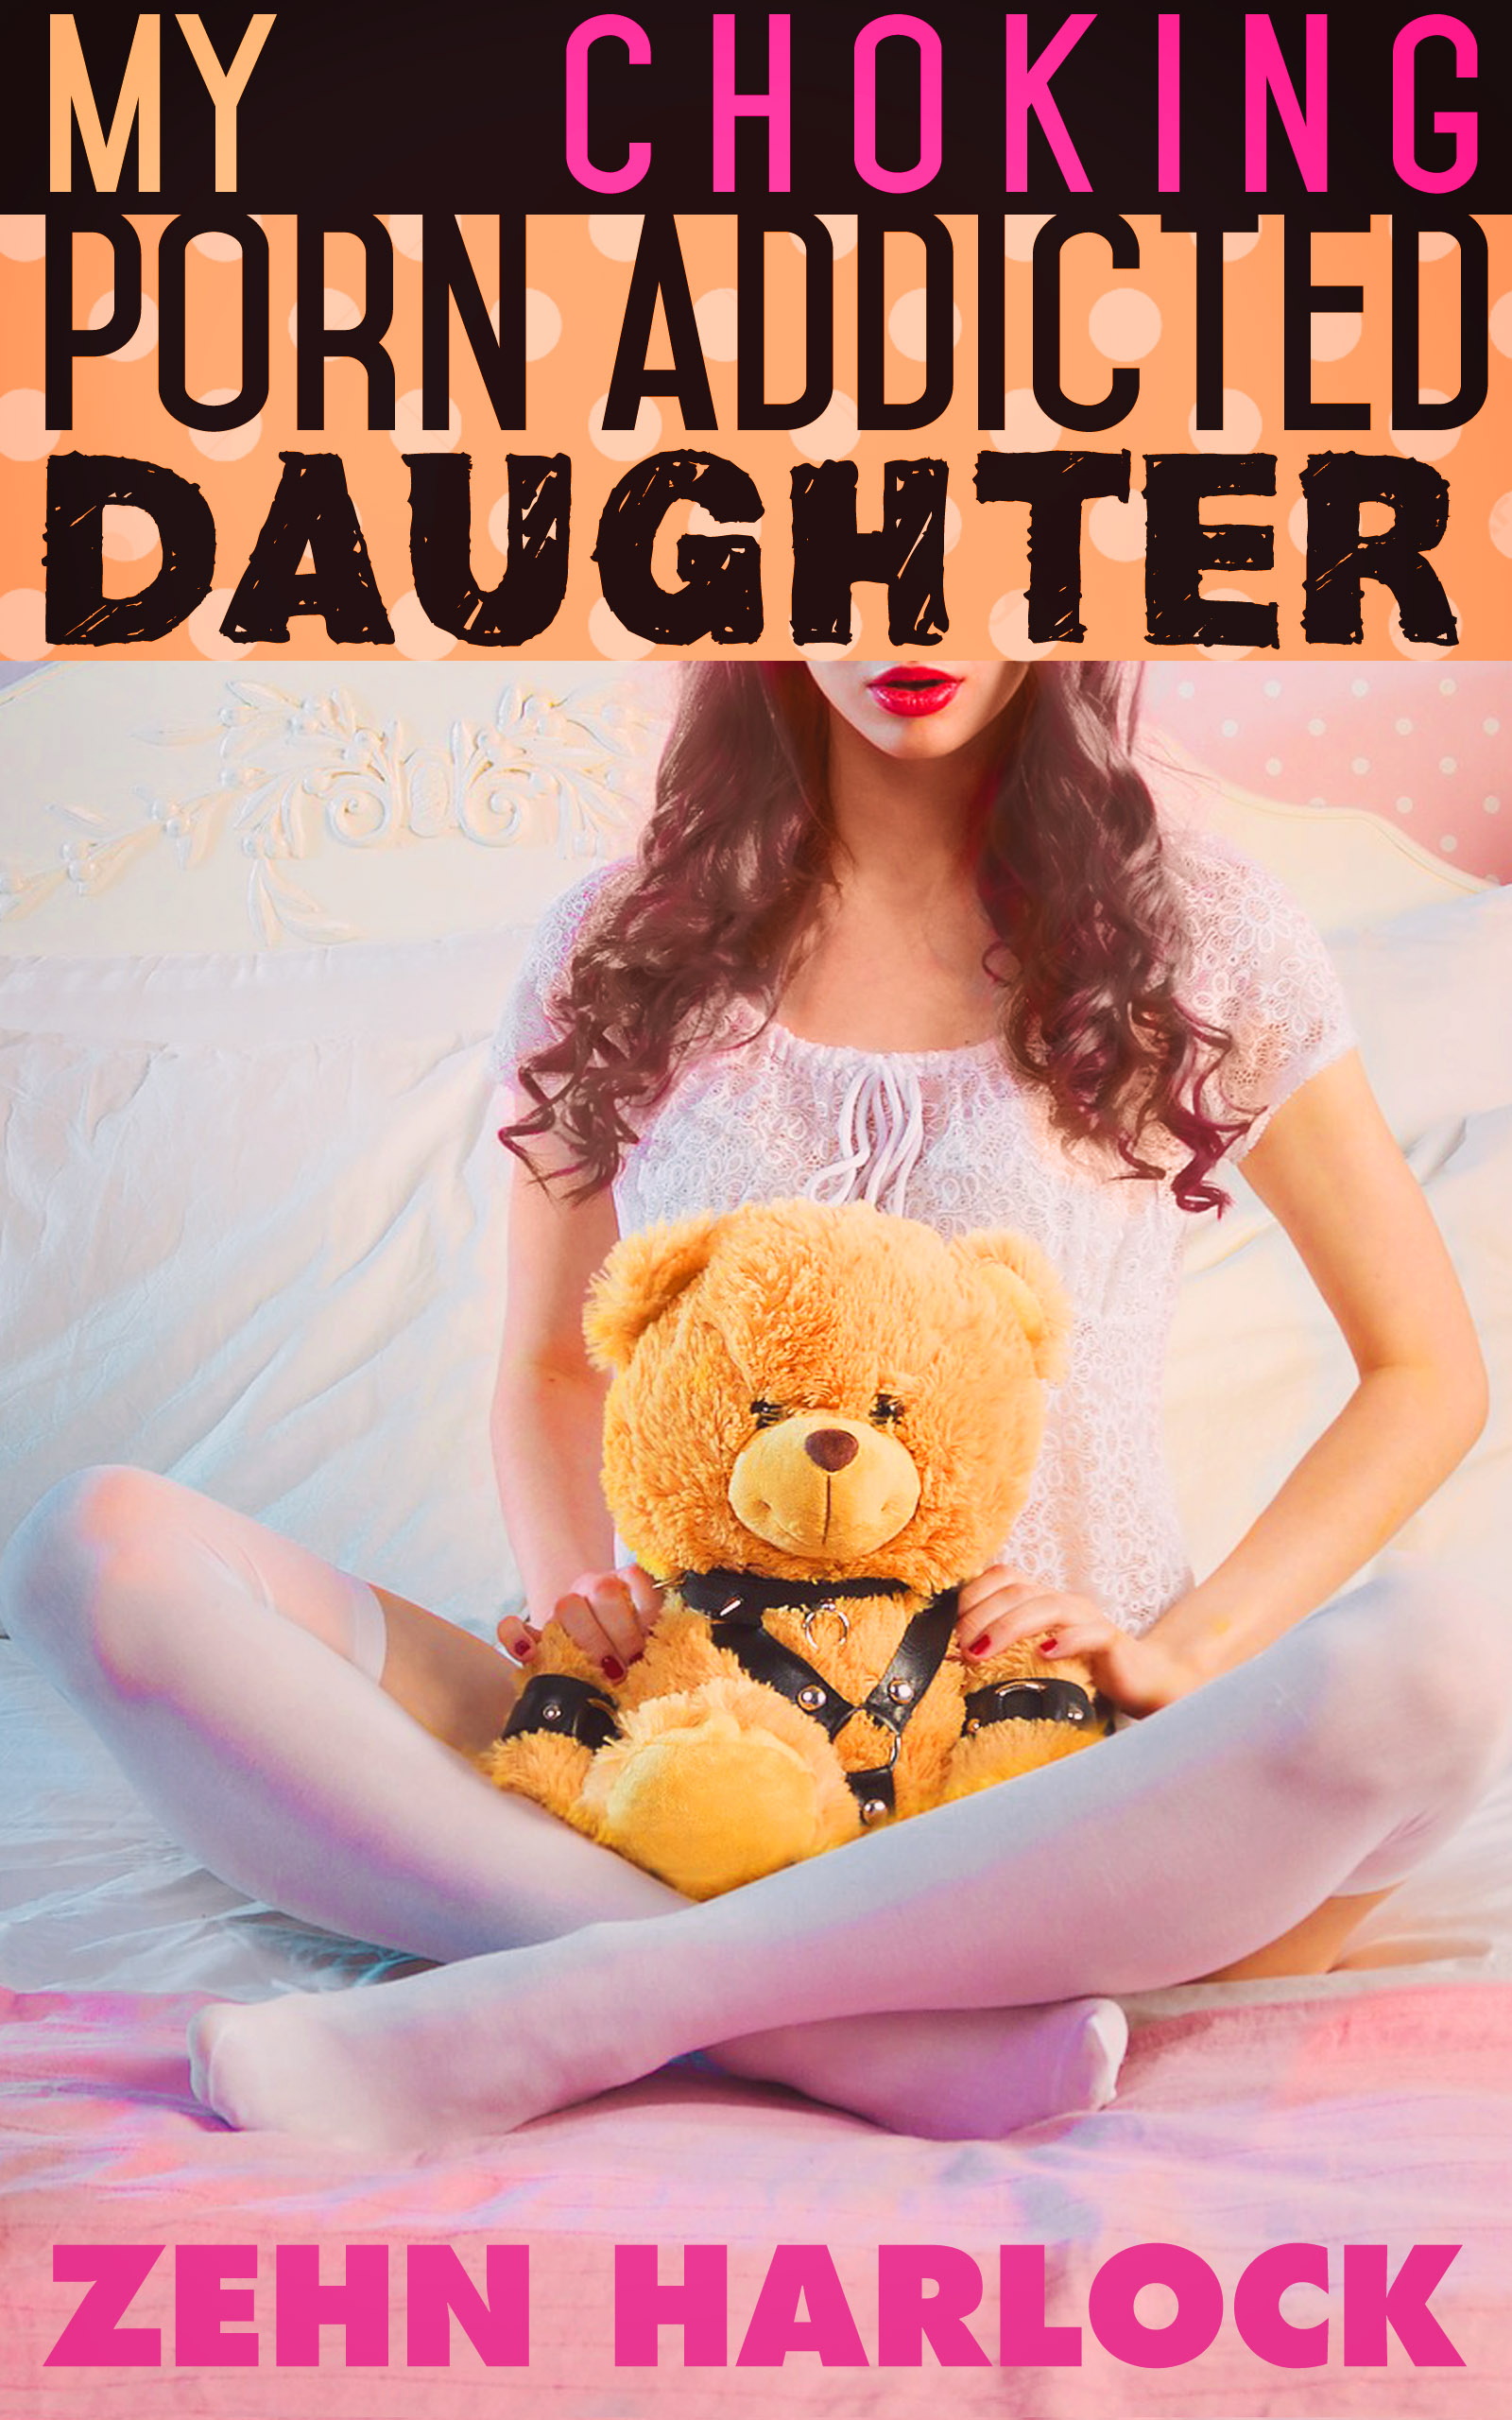 Porn Addict Caption - My Choking Porn Addicted Daughter, an Ebook by Zehn Harlock